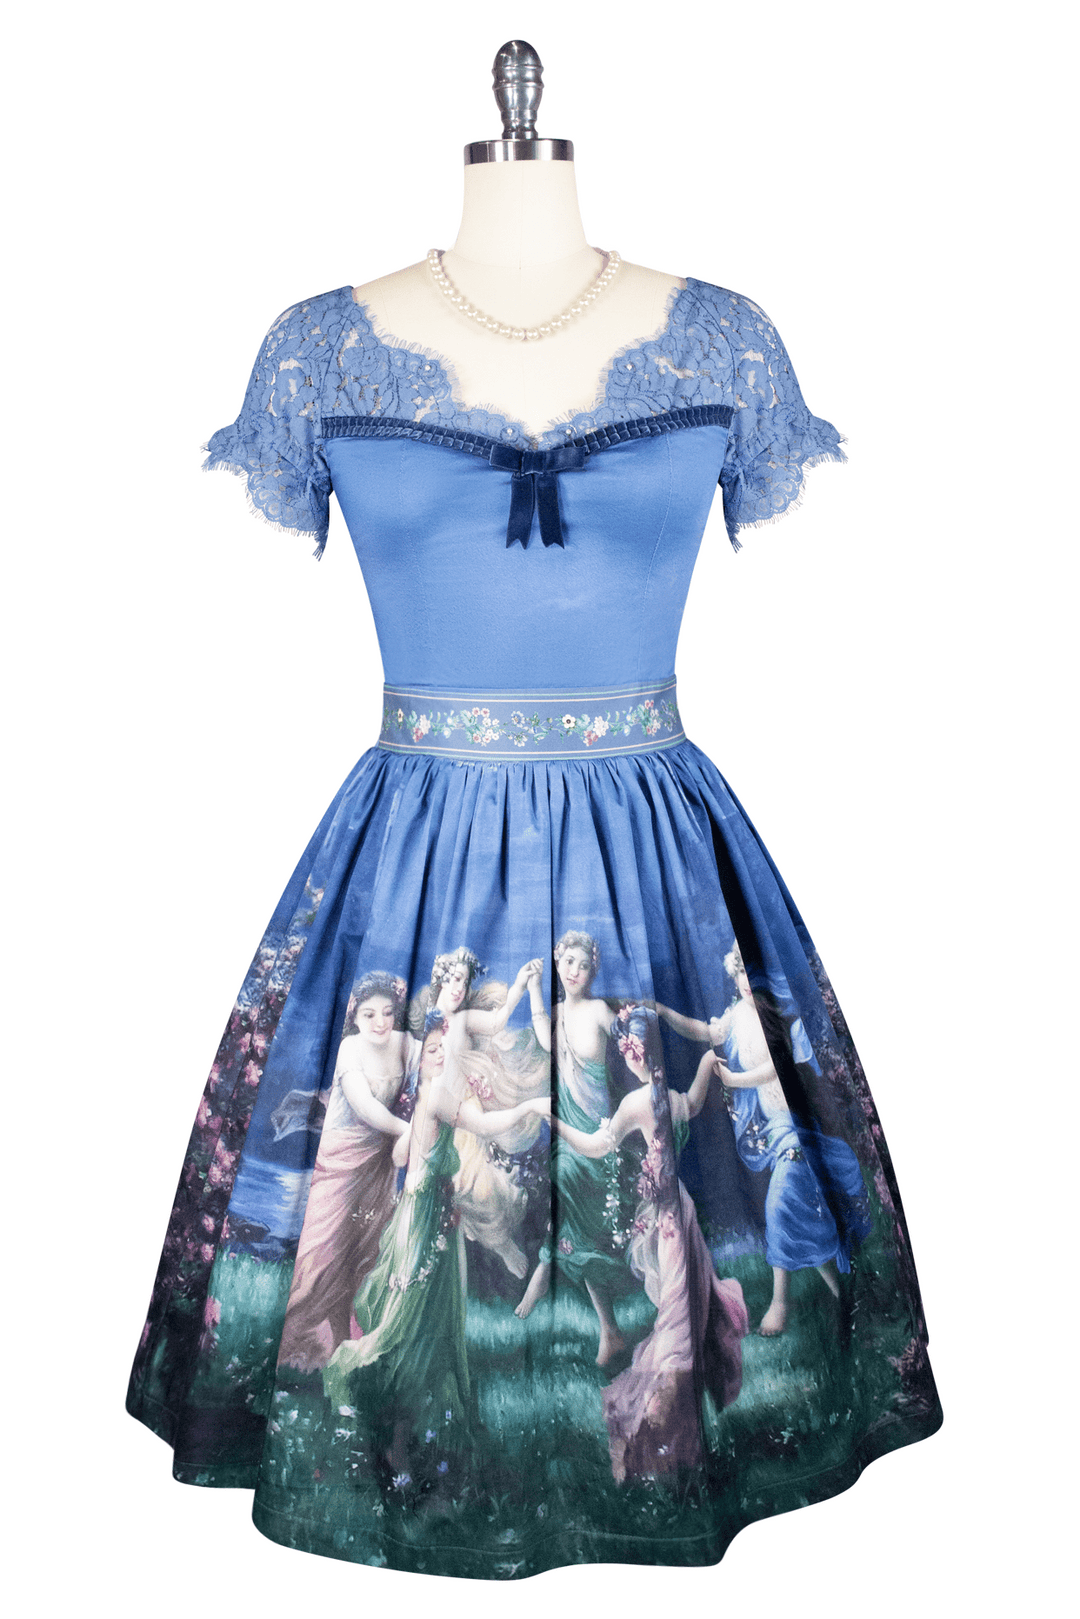 La Luna Dress - Kitten D'Amour